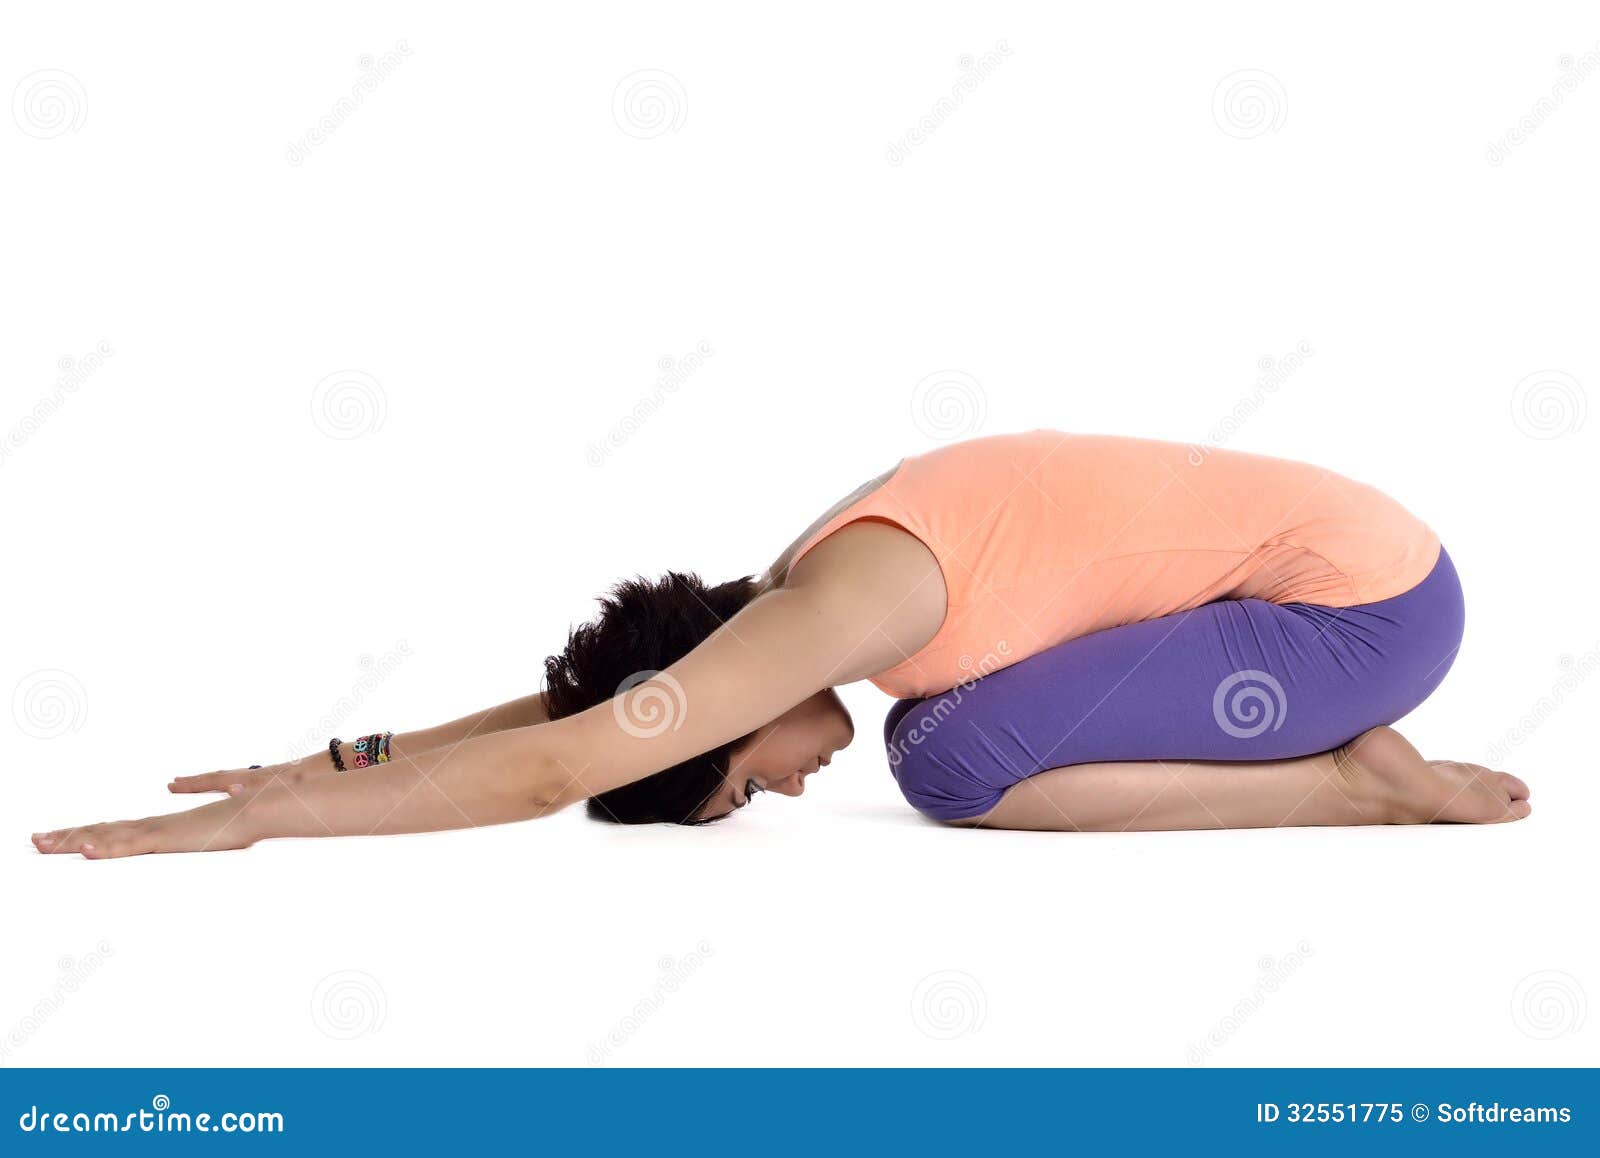 doing yoga